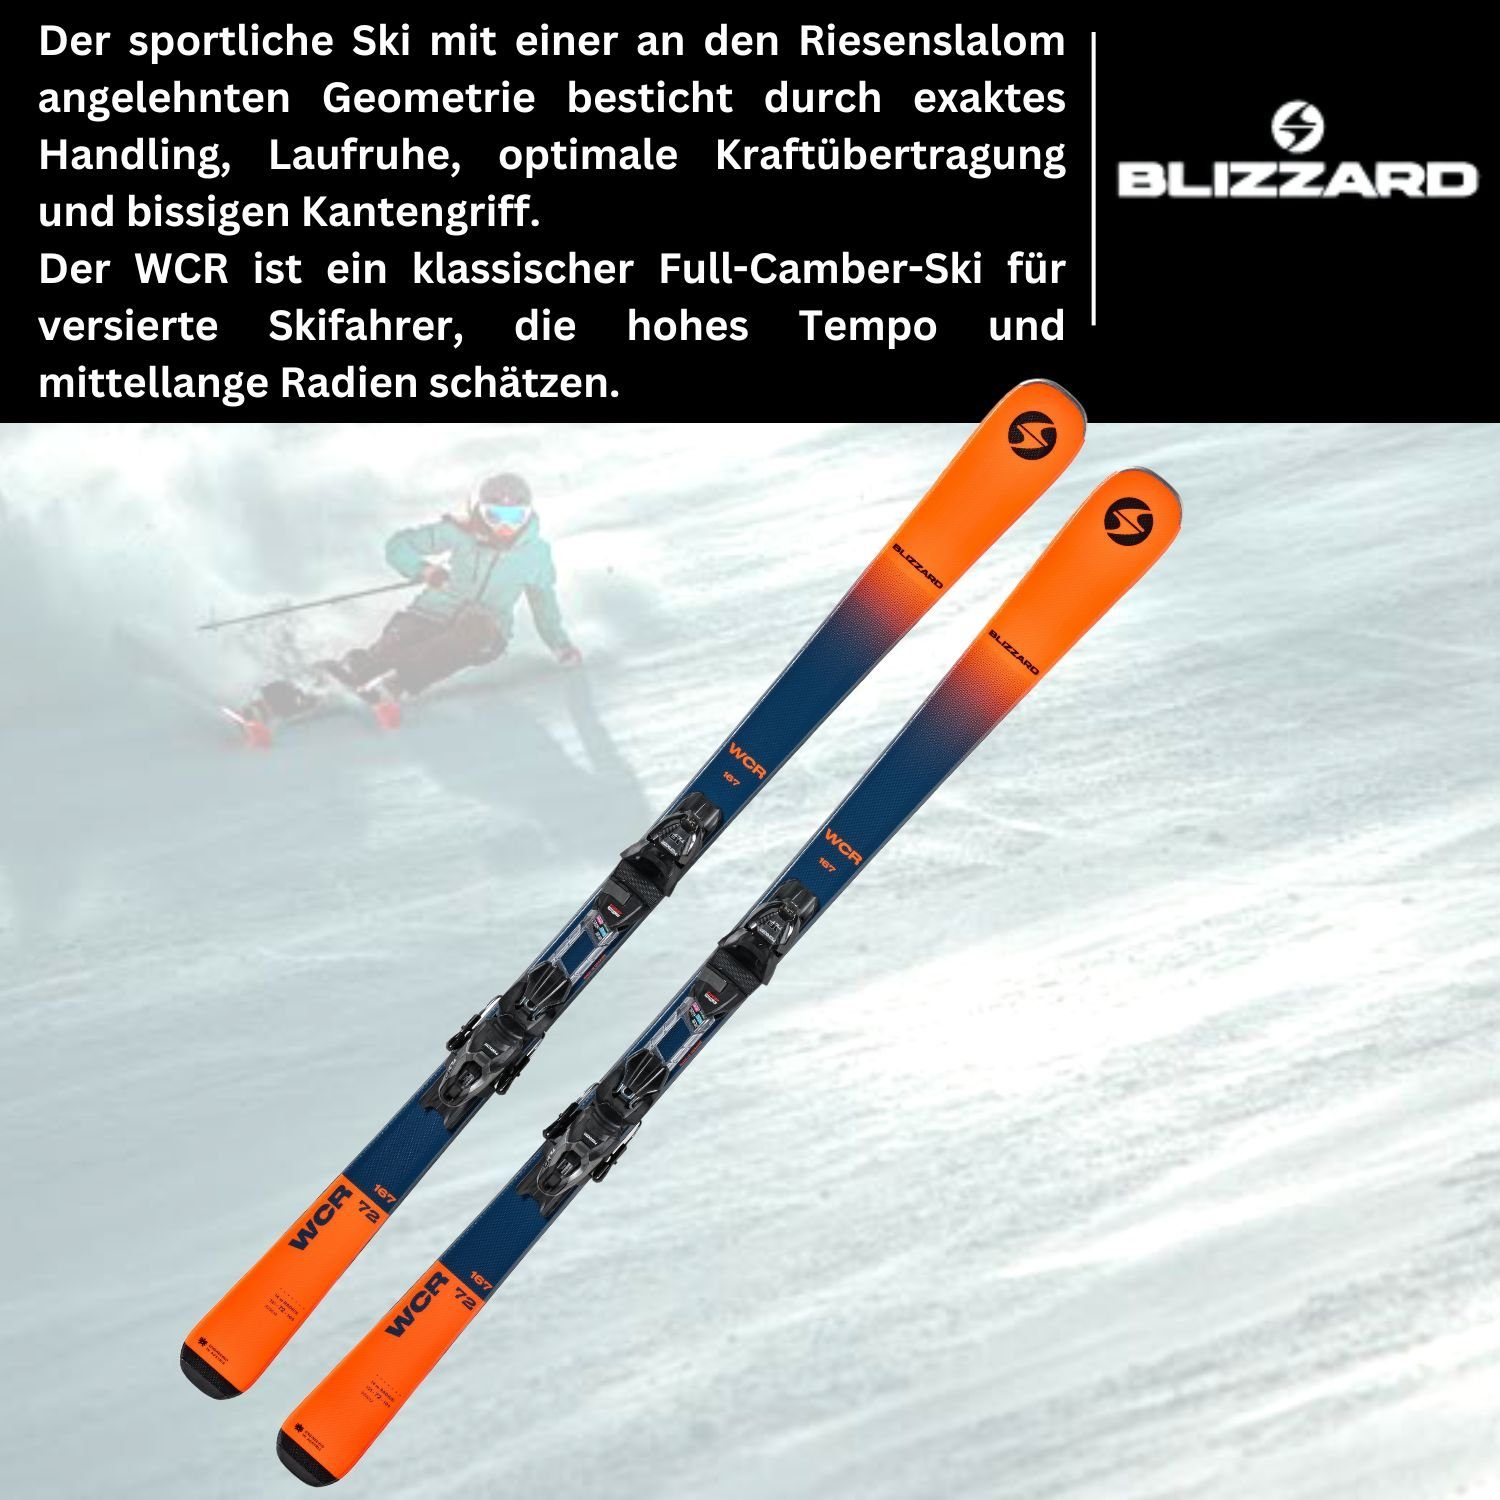 Z3-10 Bindung Ski, grau/blau Blizzard Full Rocker 10 Camber WCR + TLT Ski BLIZZARD Marker